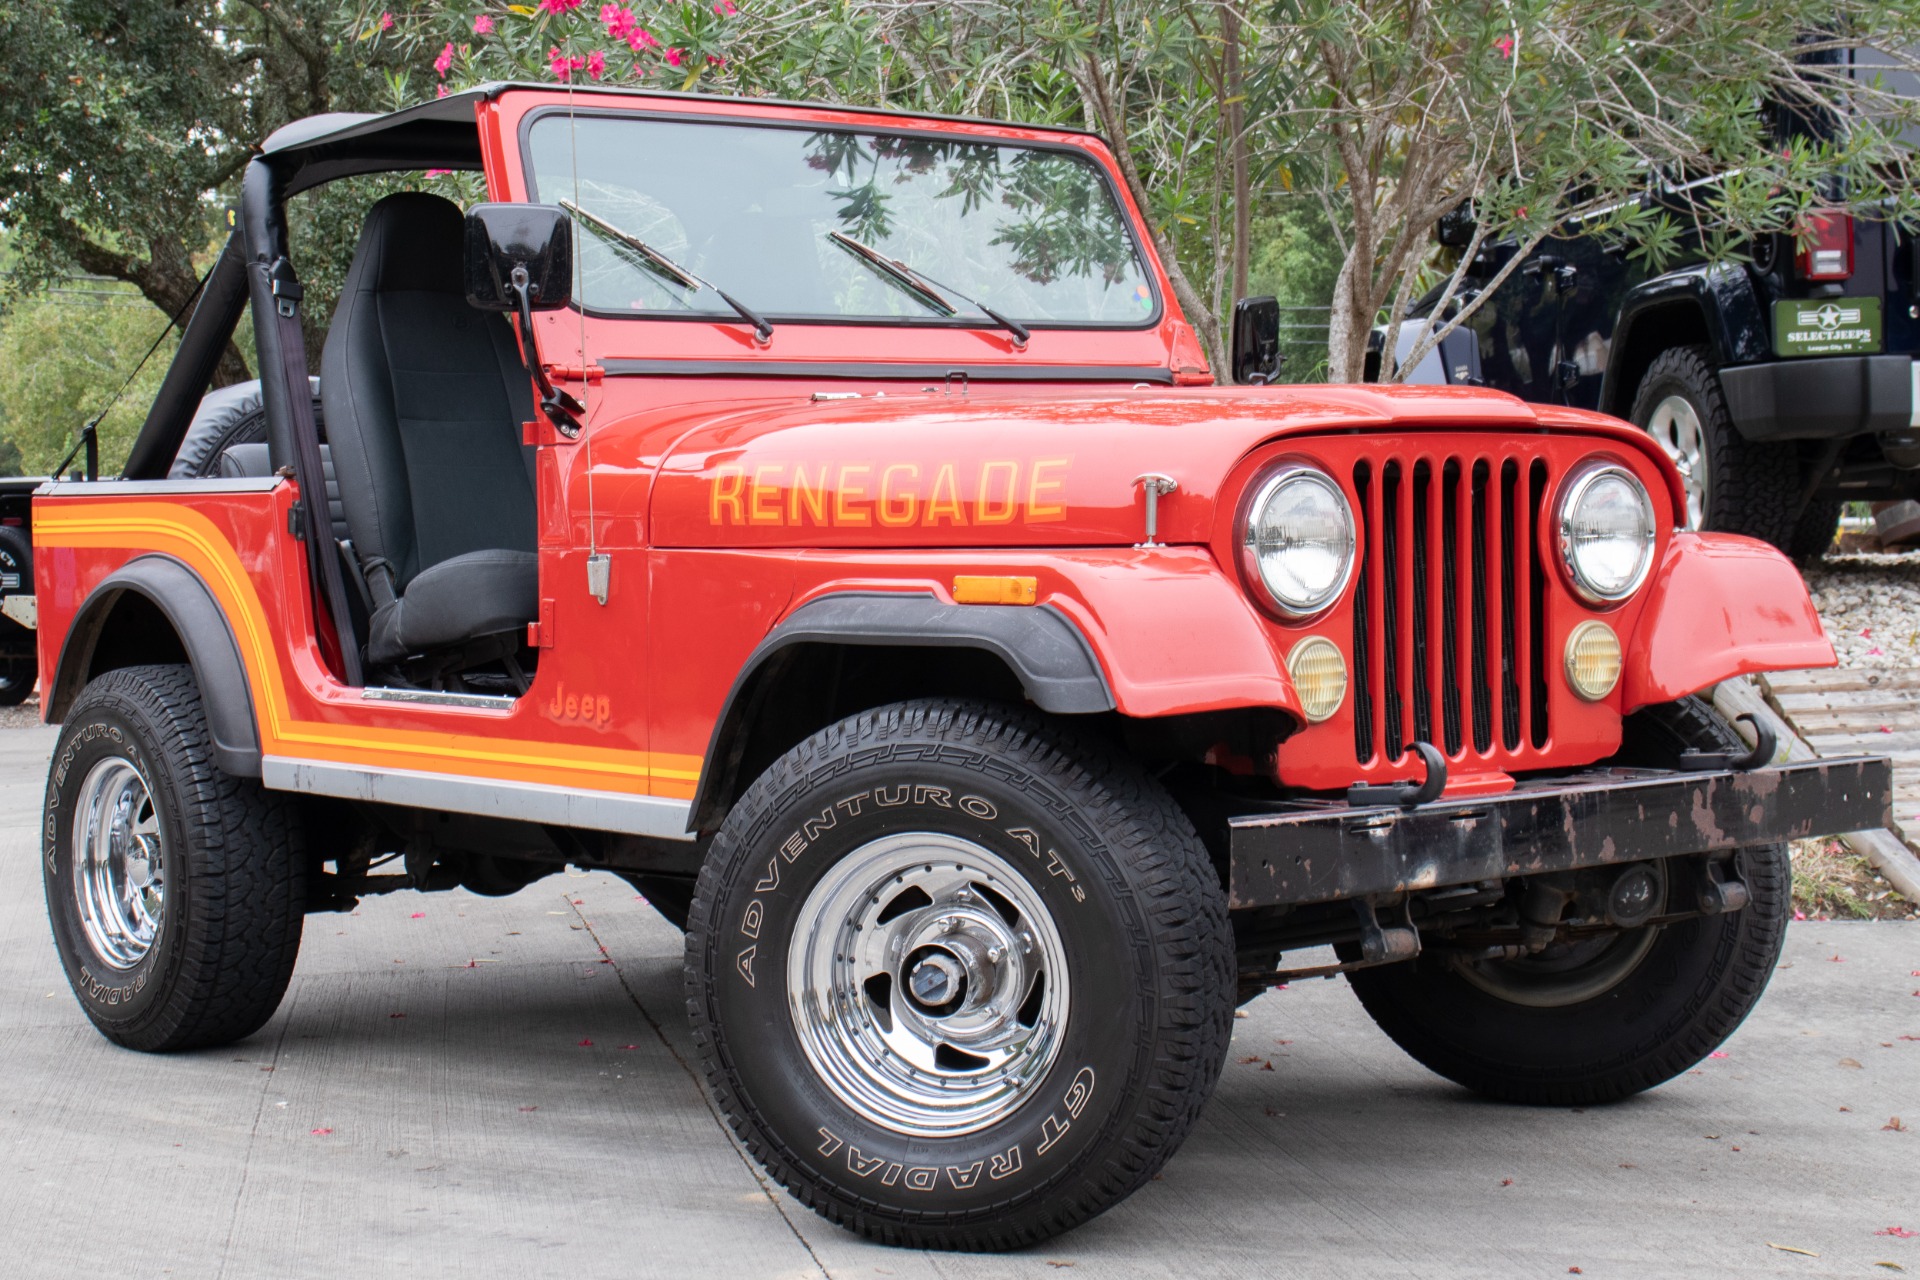 Used 1985 Jeep CJ 4WD CJ7 Renegade For Sale ($15,995) | Select Jeeps Inc.  Stock #049704